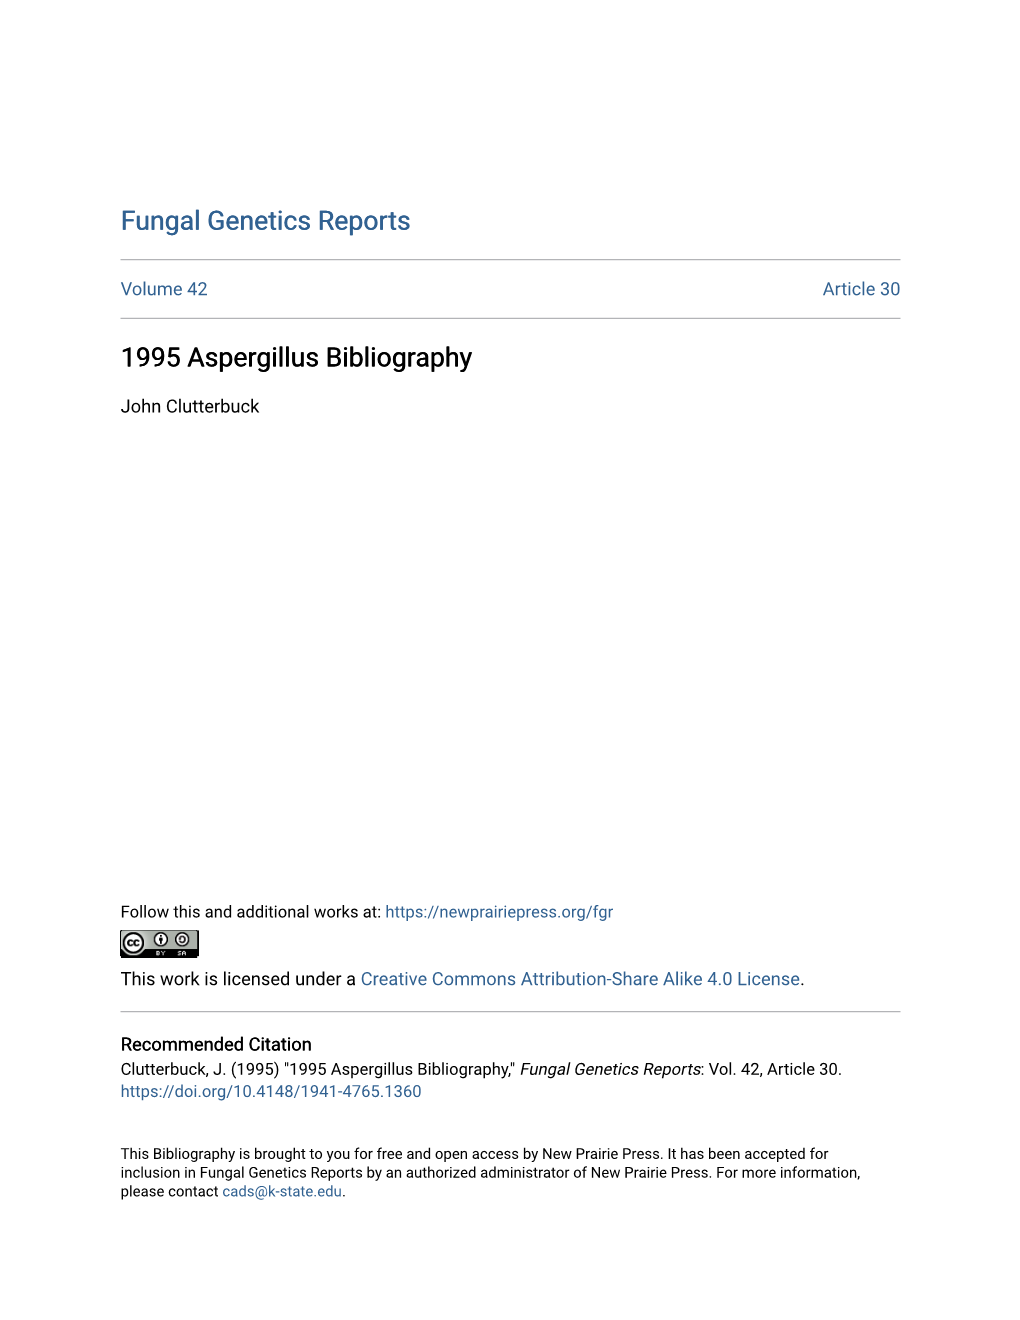 1995 Aspergillus Bibliography